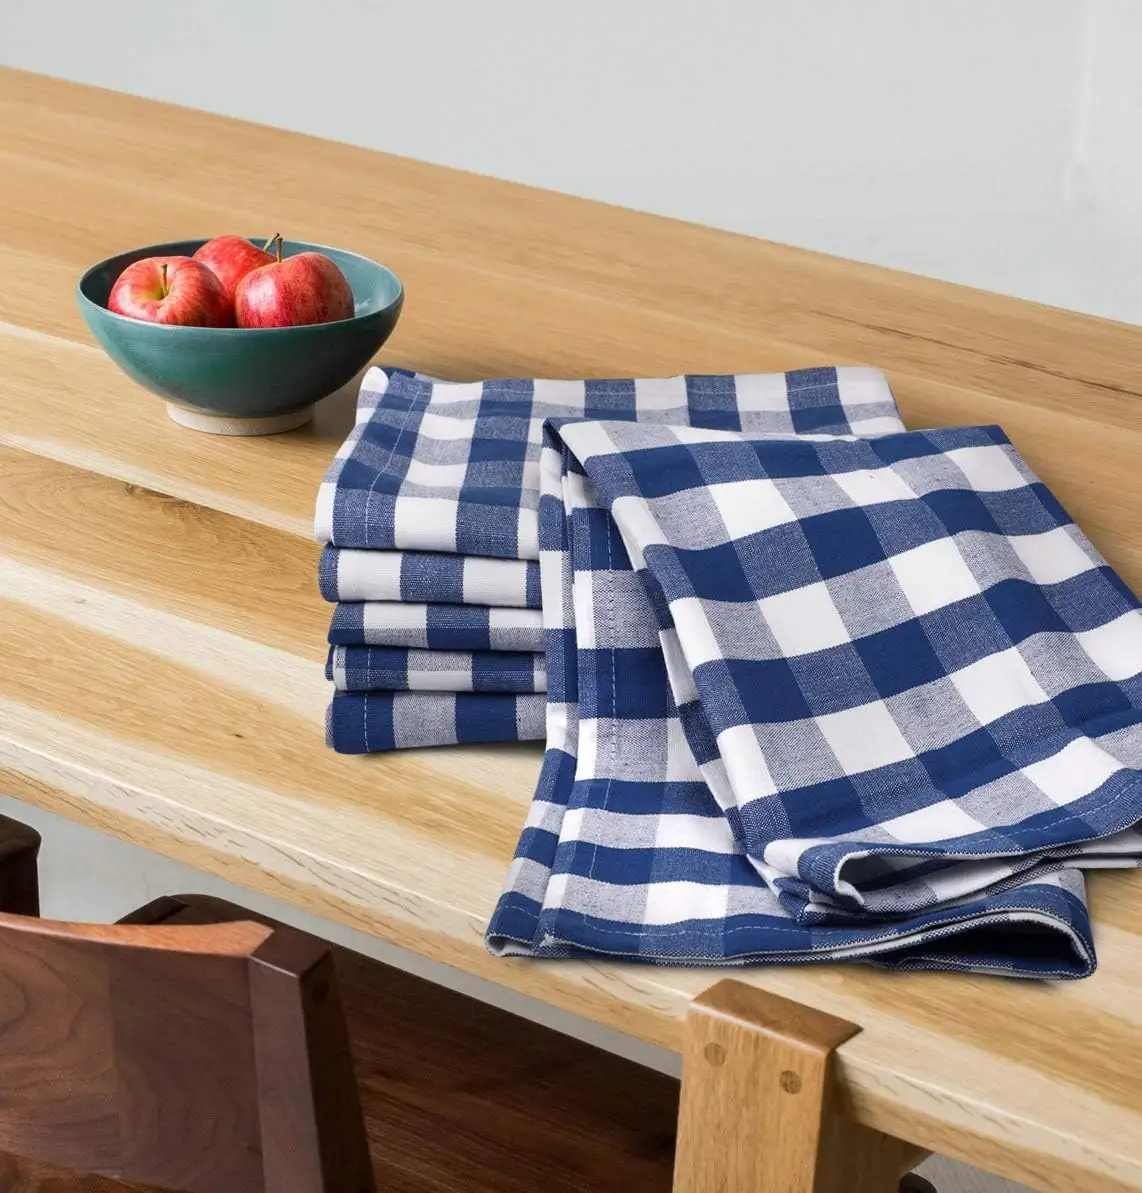 Skymoving nuevo personalizado azul tejido lavable cocina toalla de té altamente absorbente 100% algodón Natural toallas de té para Cocina